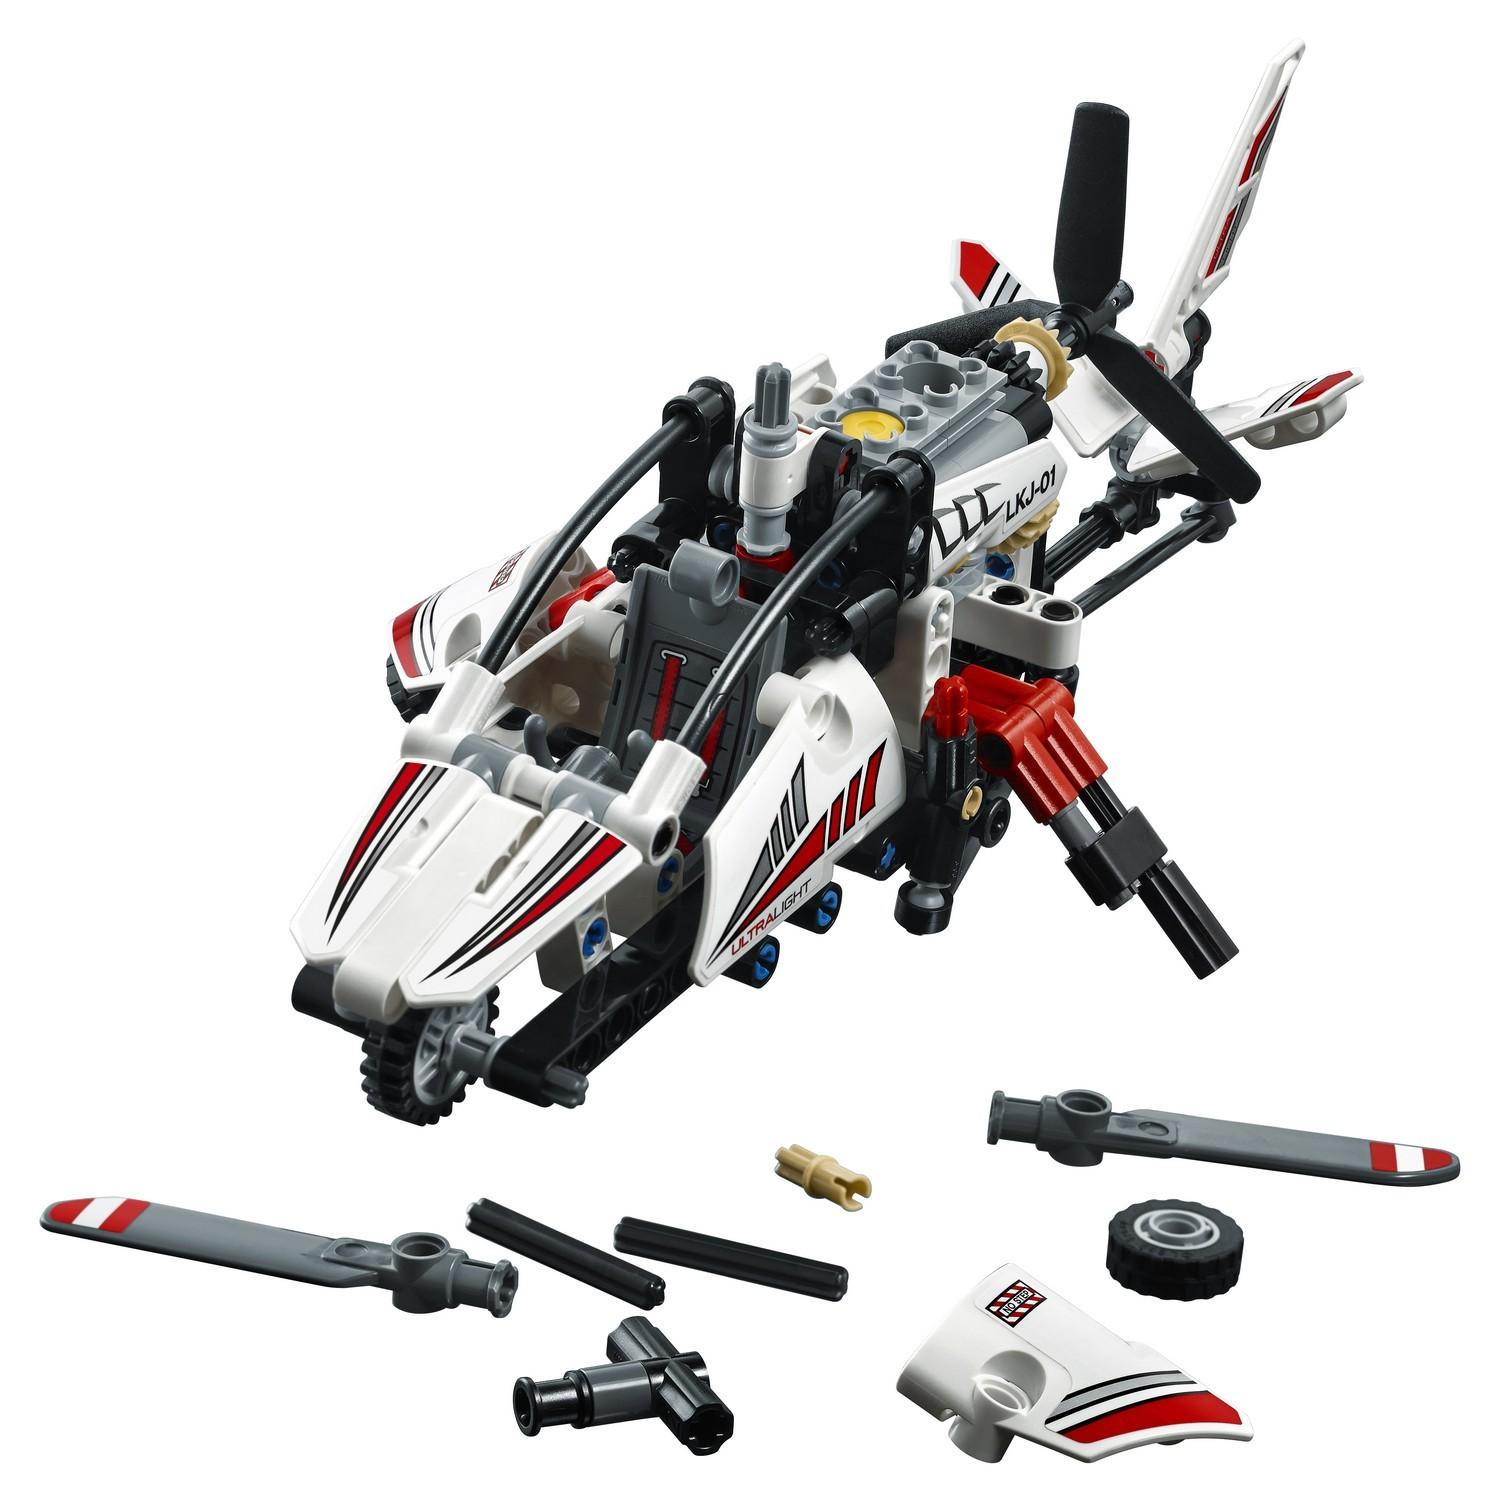 Lego Technic 42057 Сверхлёгкий вертолёт